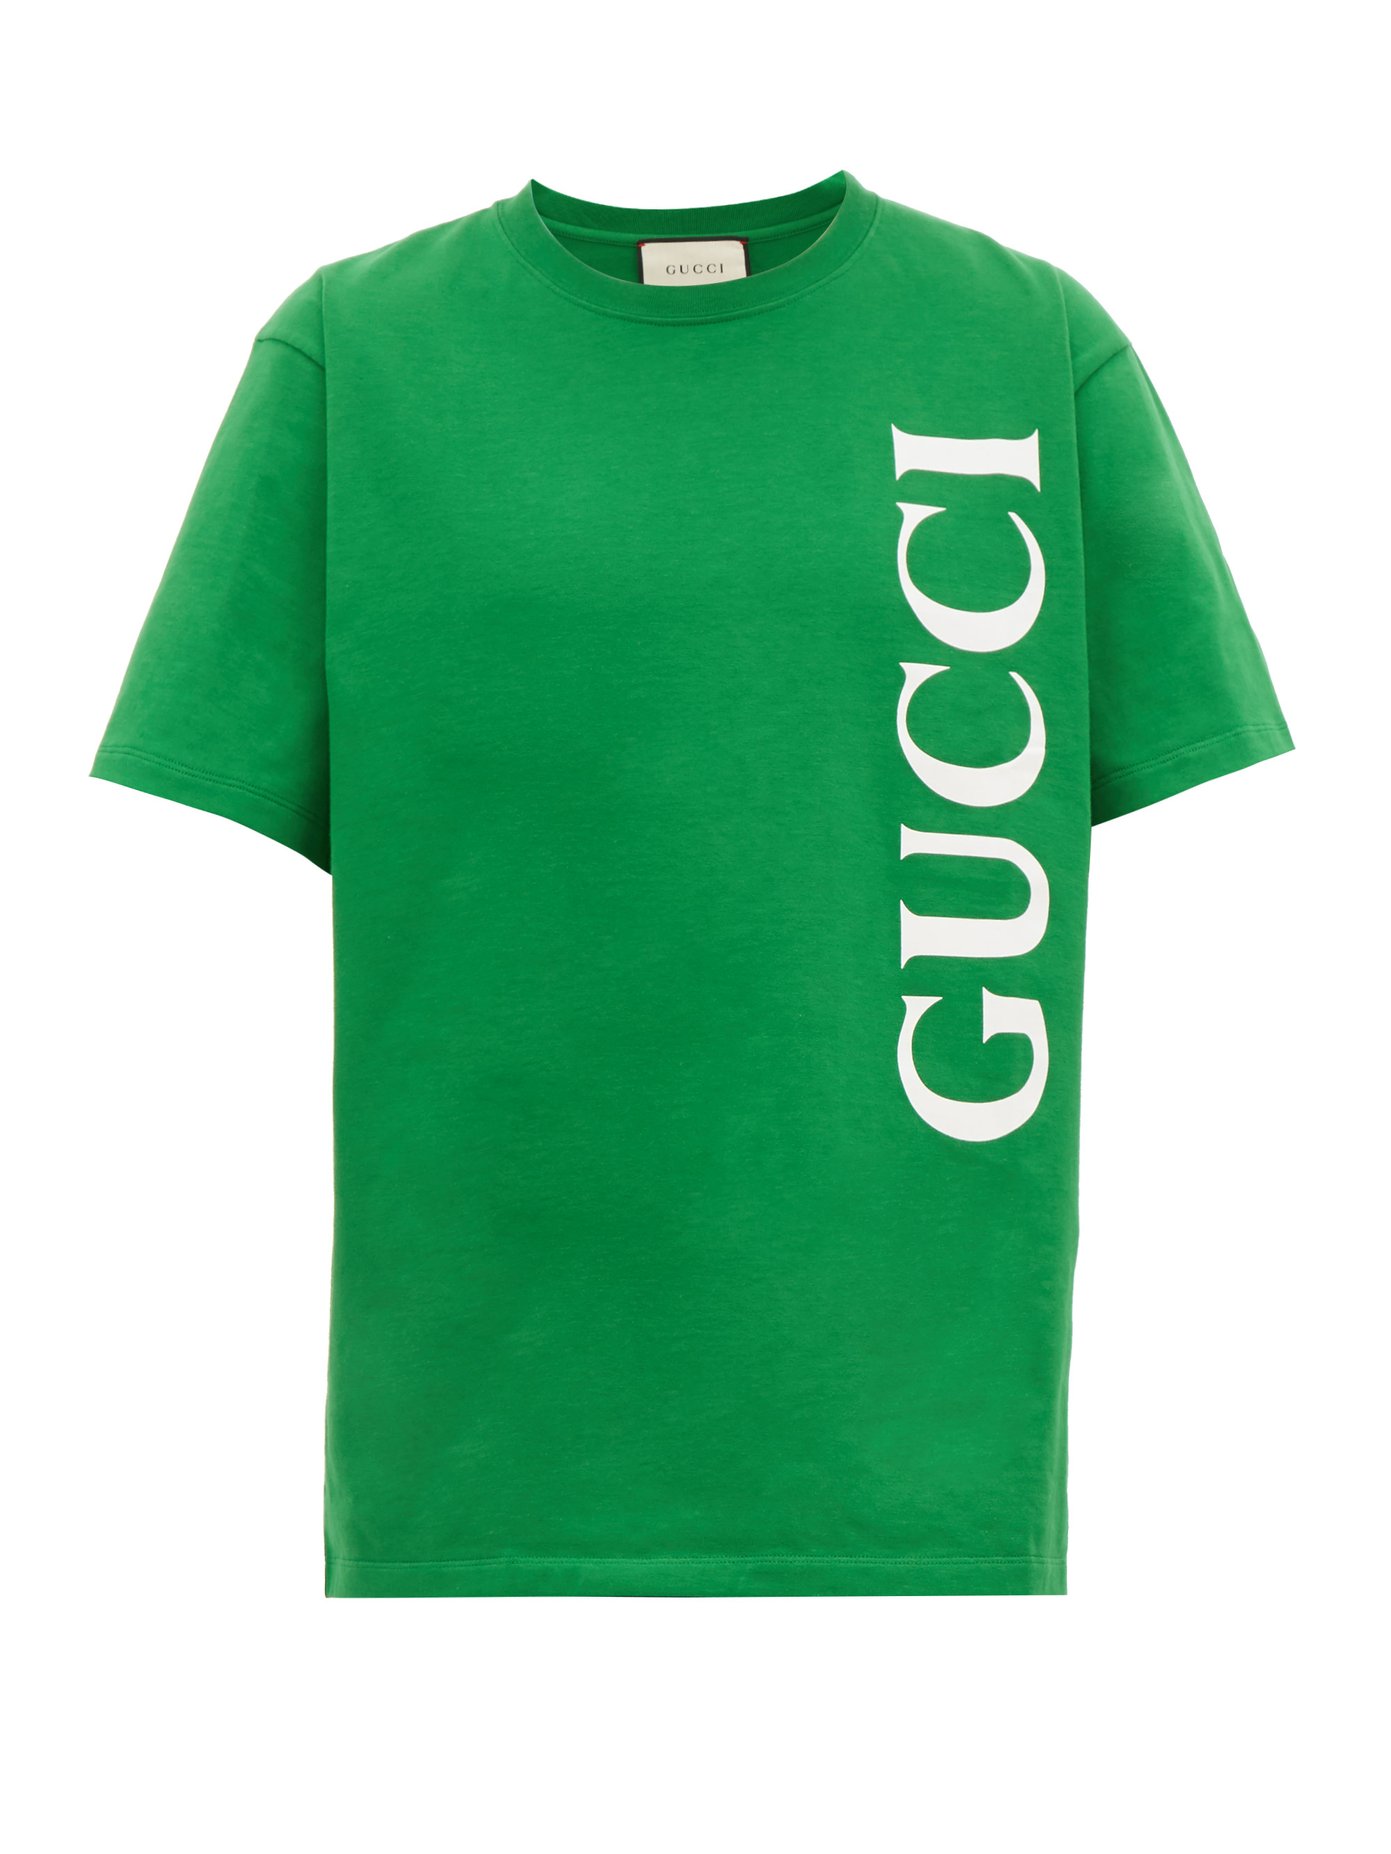 green gucci shirt